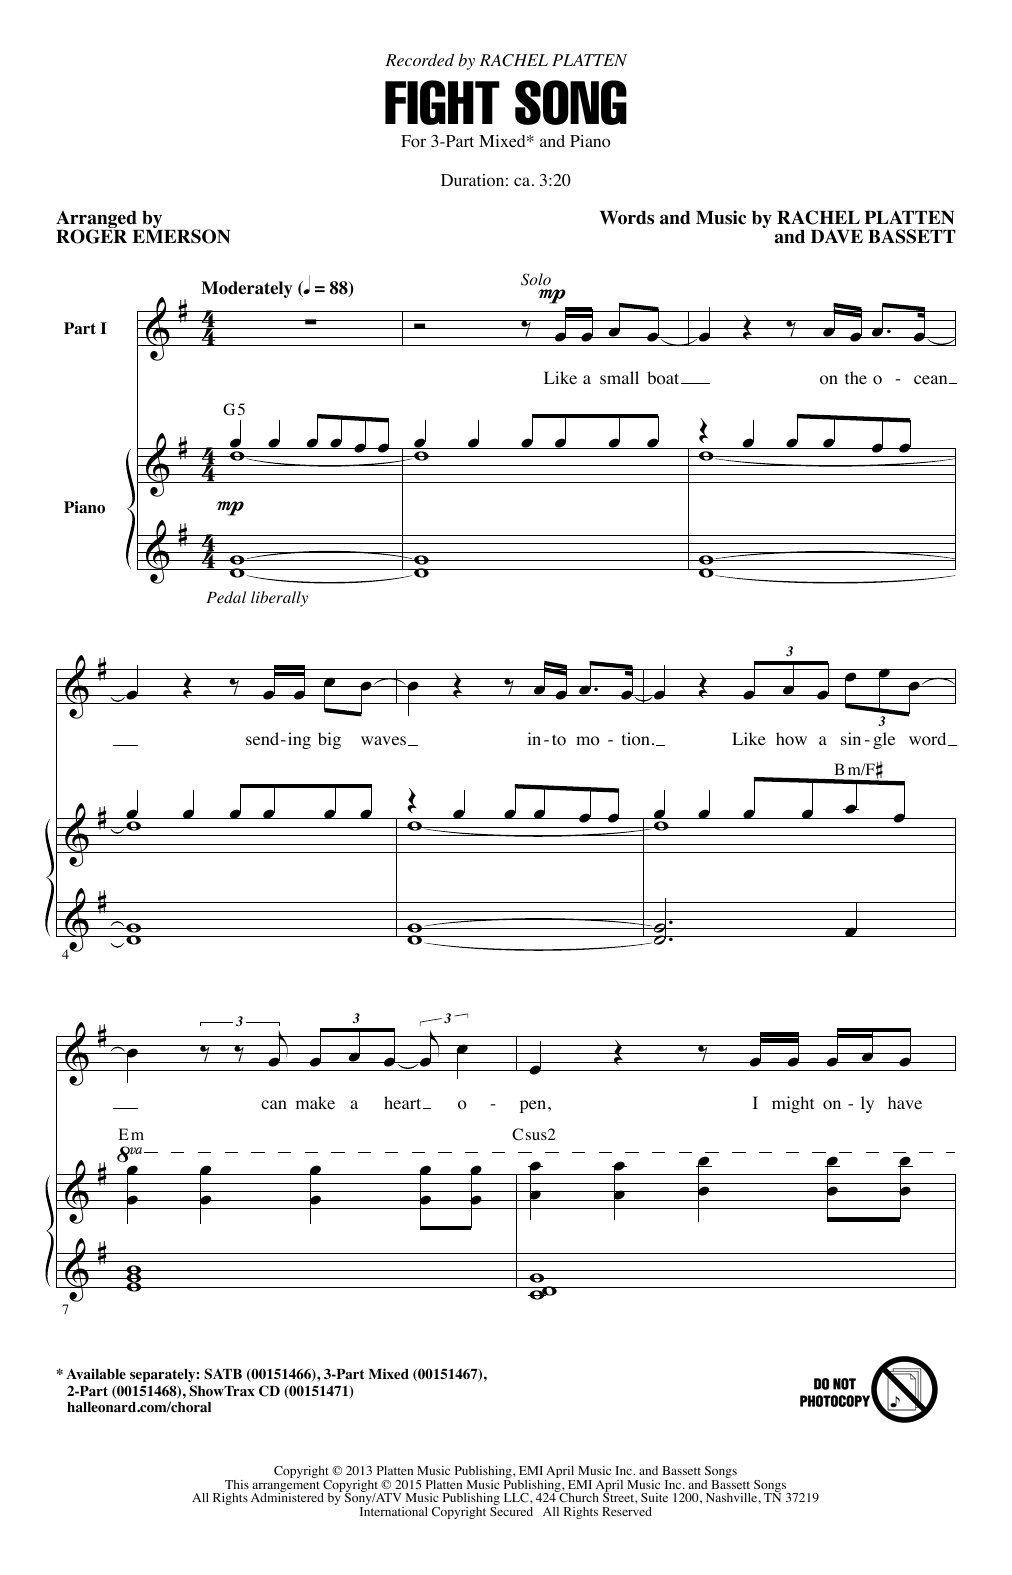 Rachel Platten Fight Song (arr. Roger Emerson) Sheet Music Notes & Chords for 2-Part Choir - Download or Print PDF